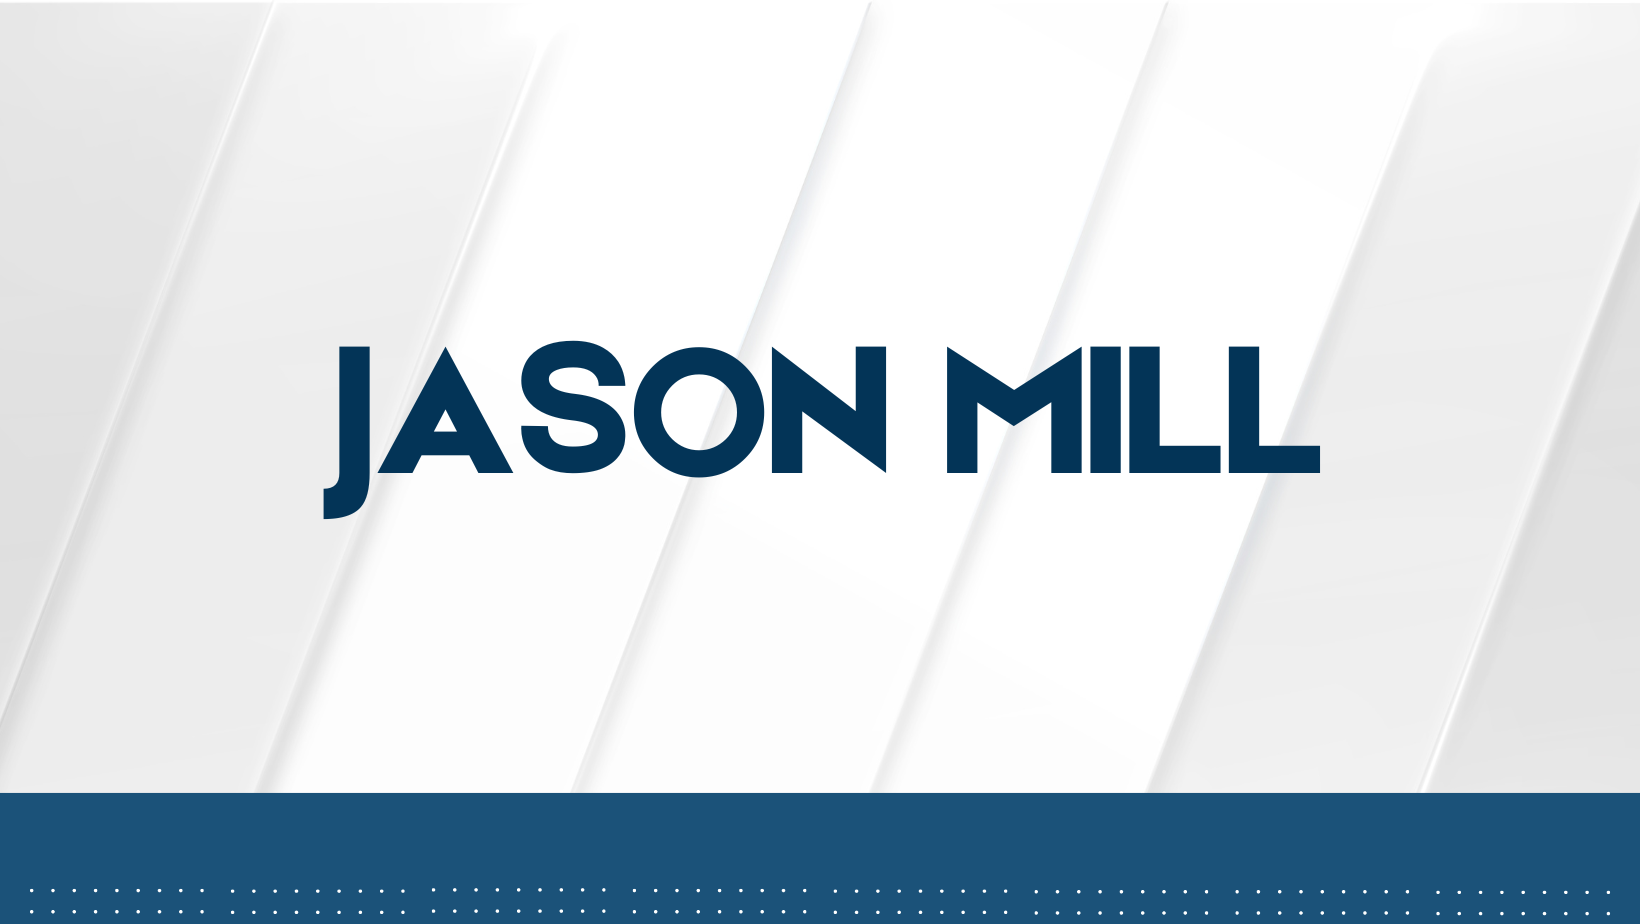 Mill Jason